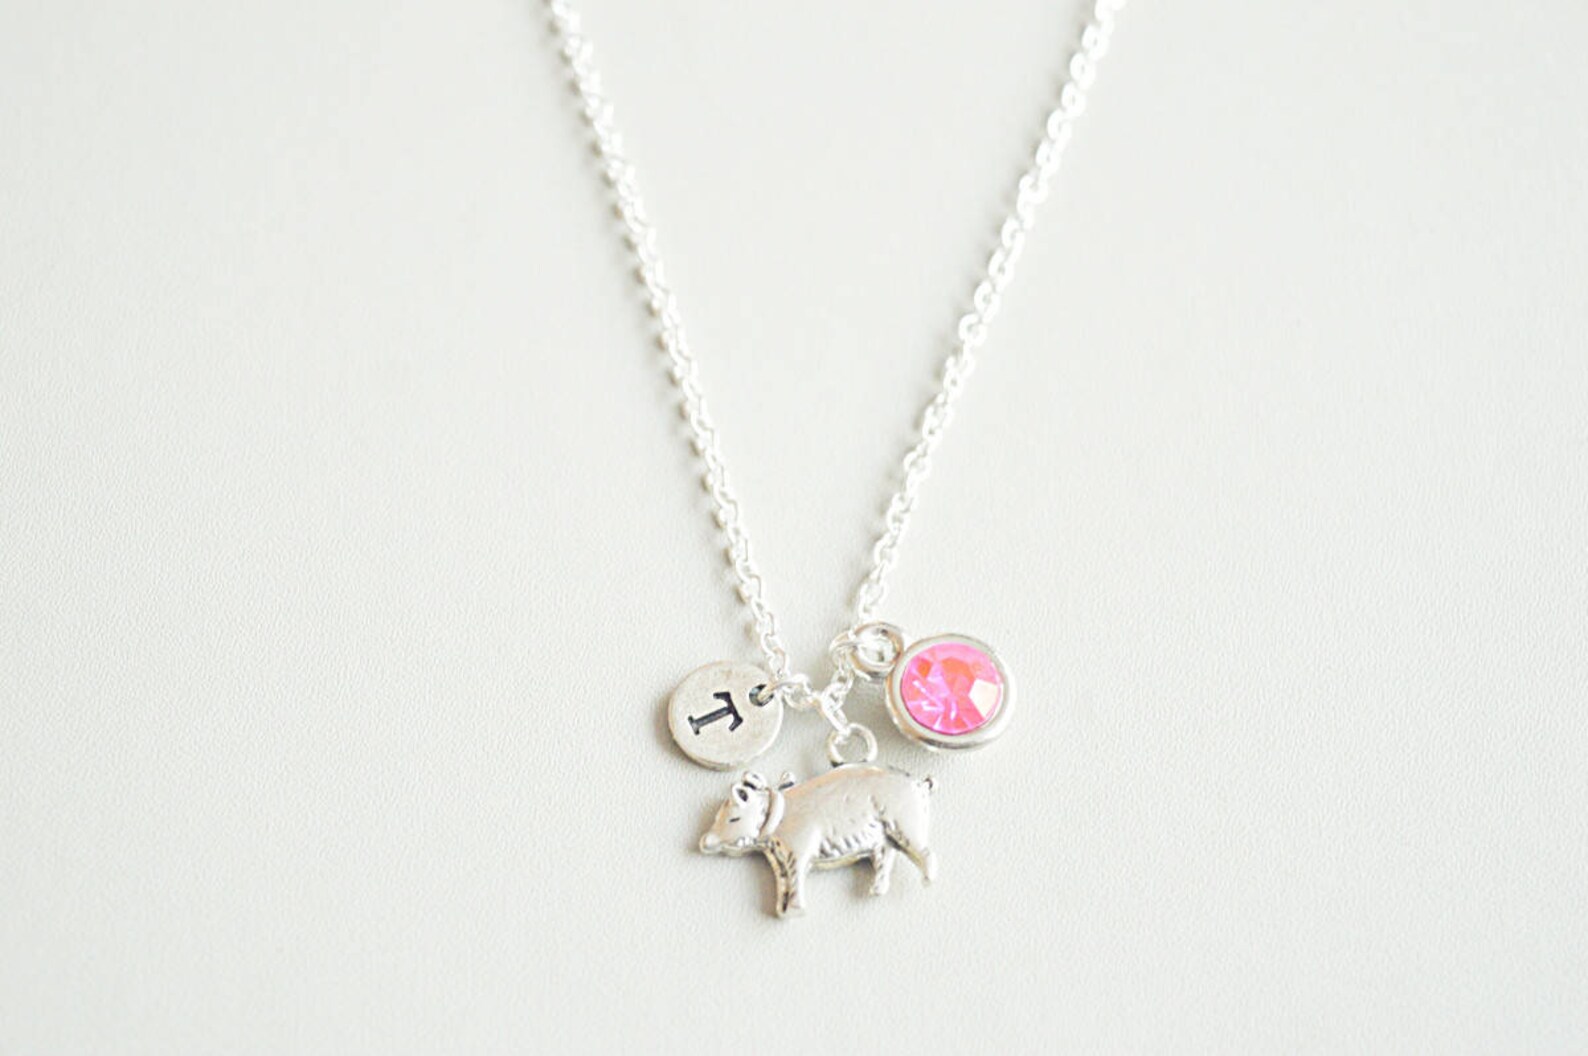 Pig Jewellery Pig Necklace Pig Gifts Pork Pig charm | Etsy